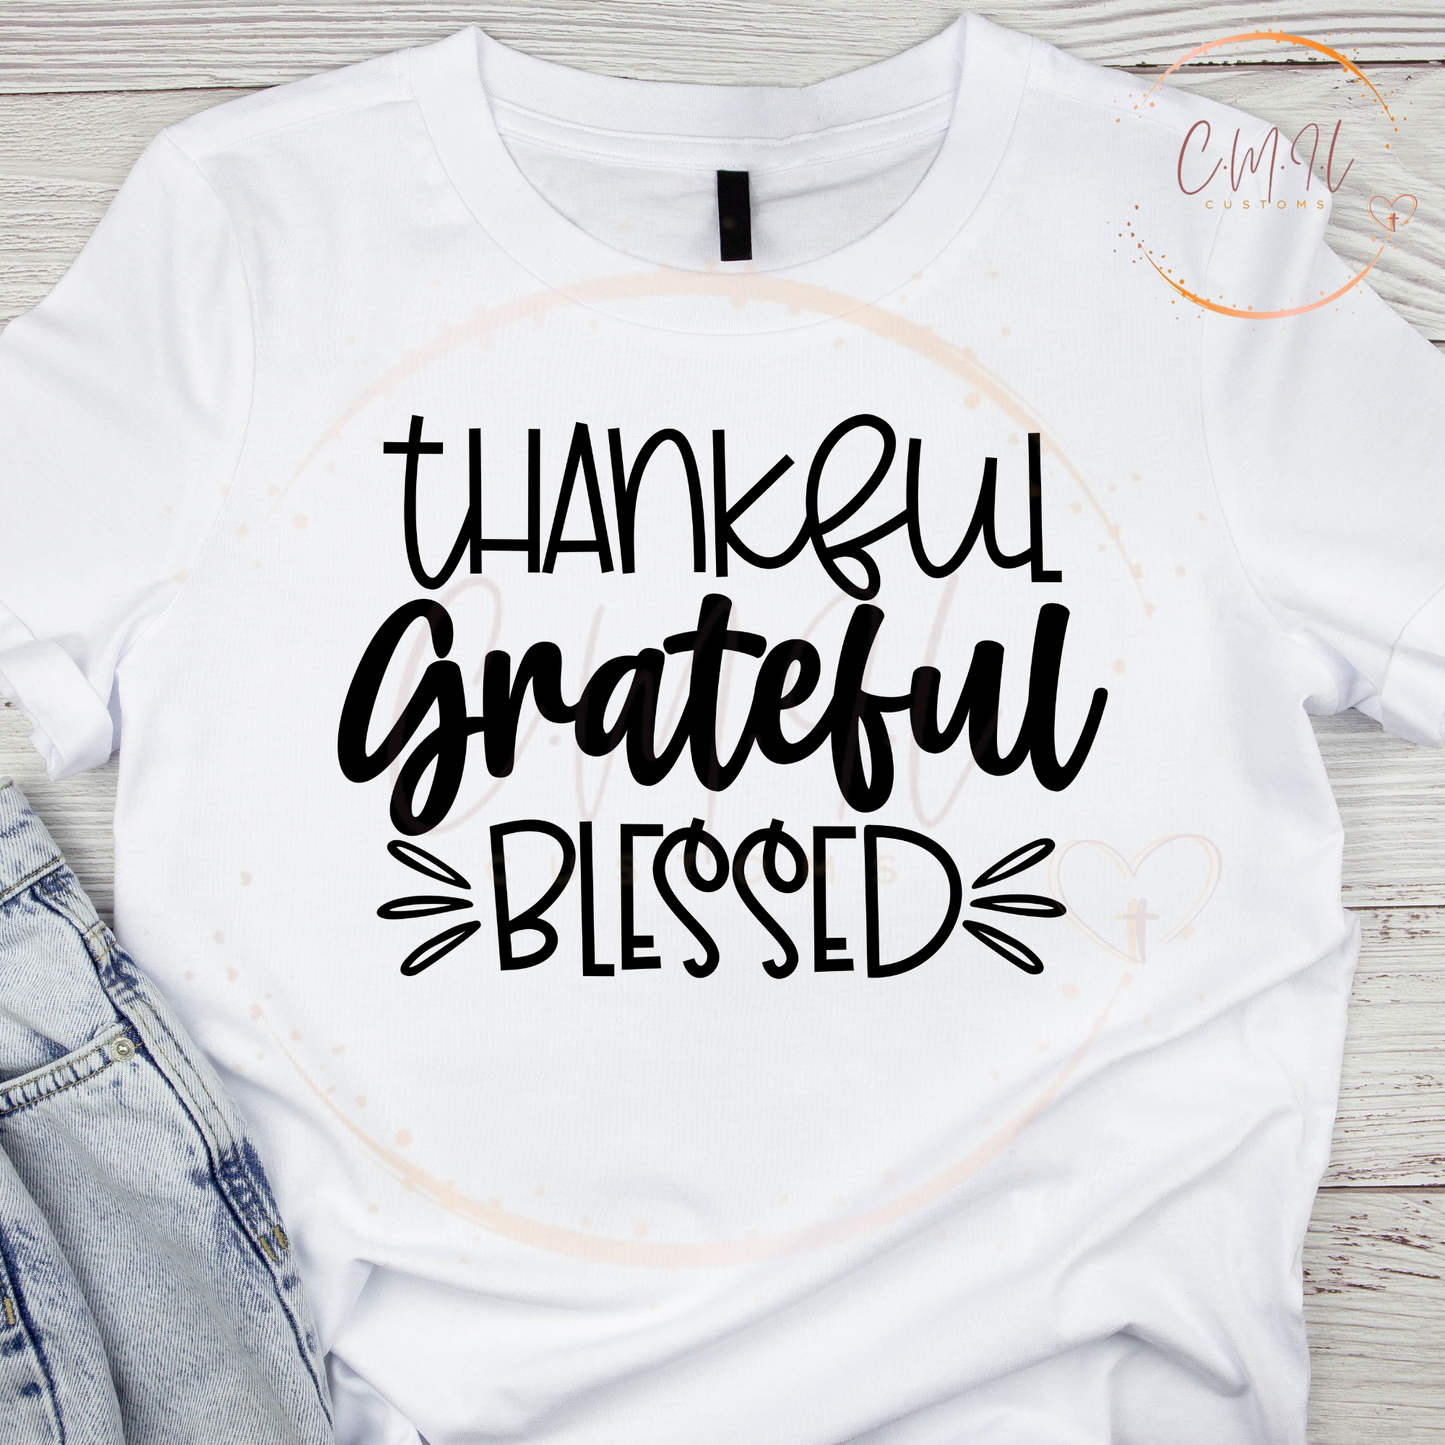 Thankful, Grateful Blessed